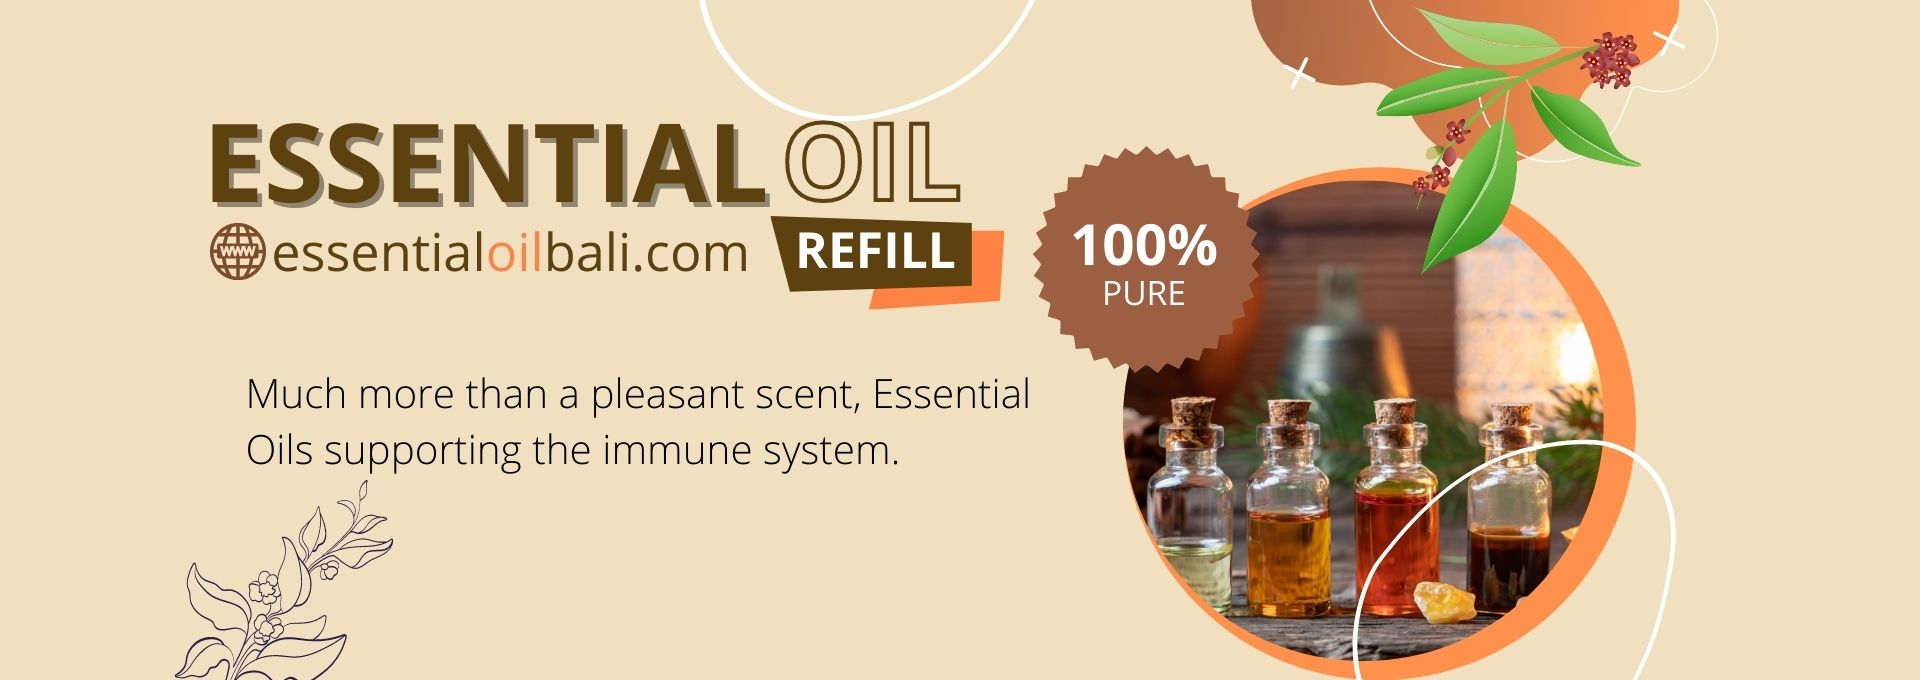 essential-oil-refill.jpg